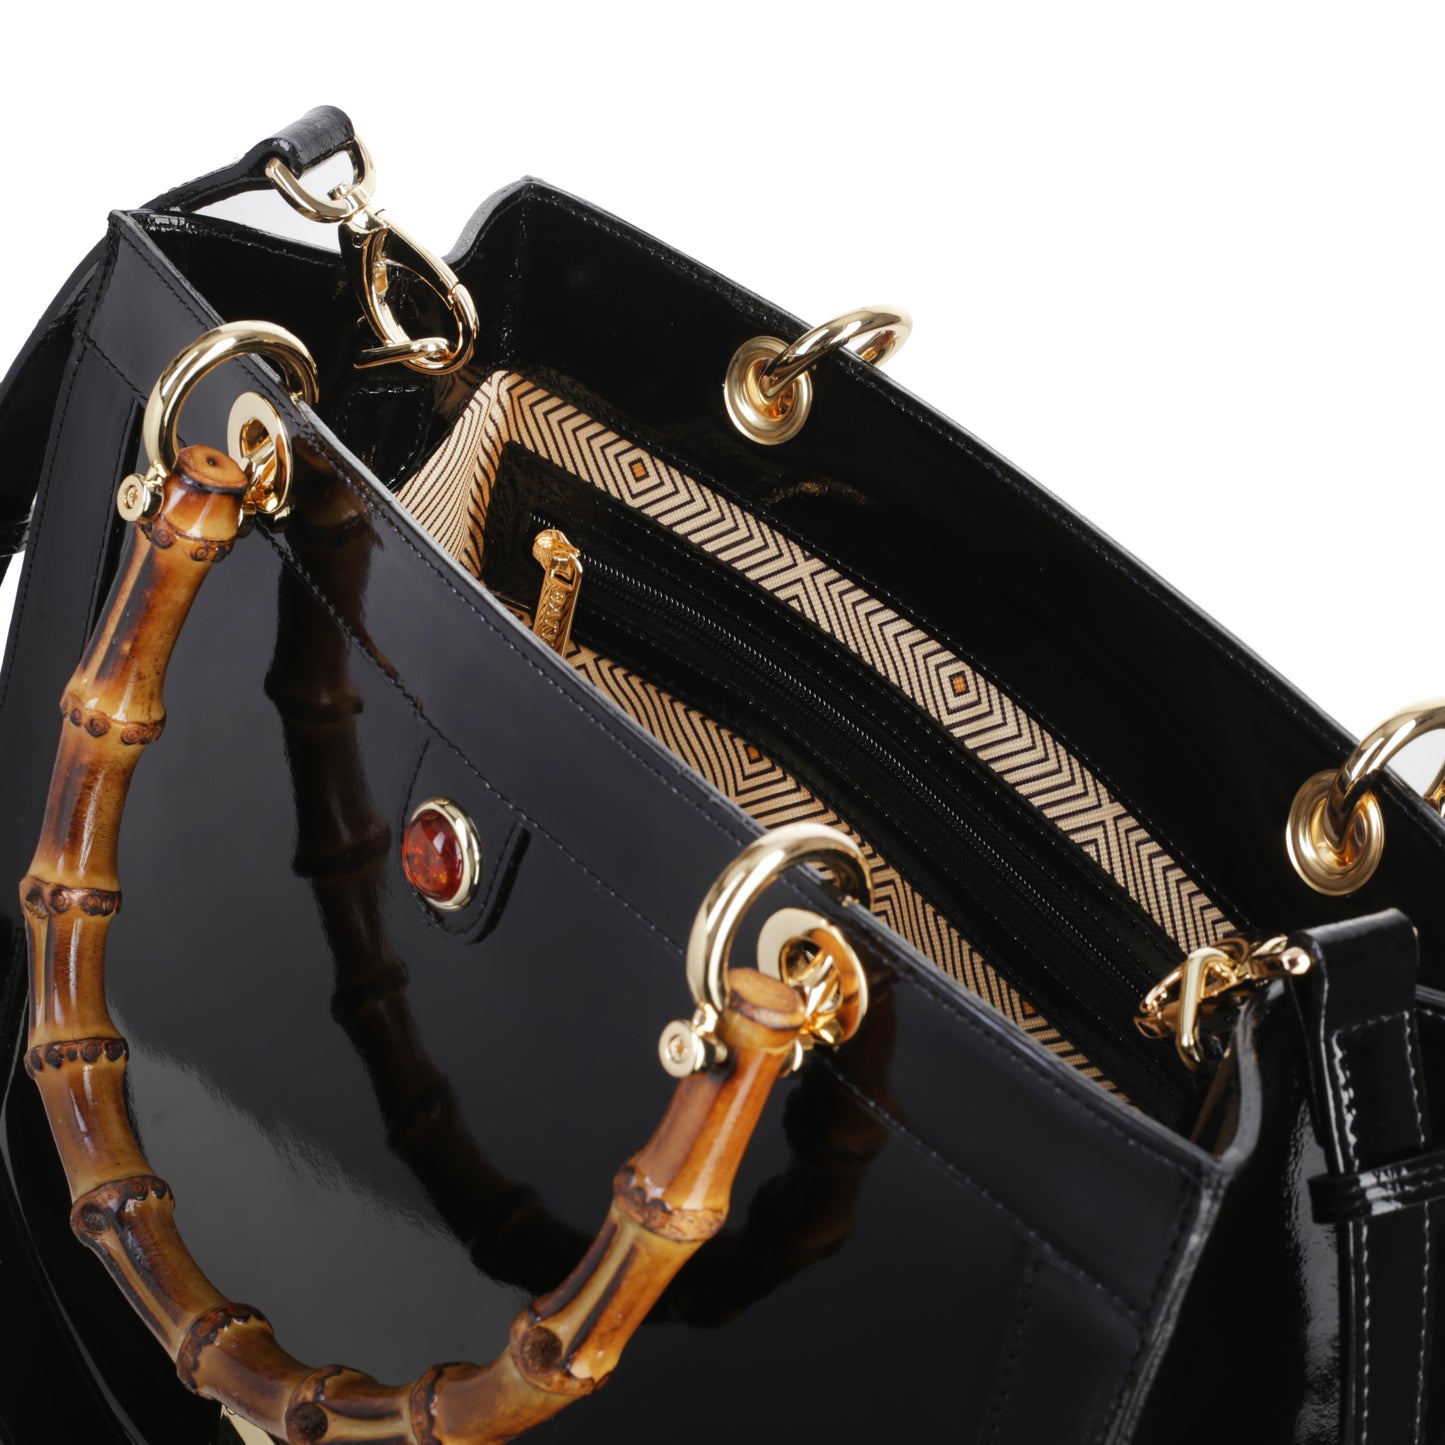 THENA VERNICE BLACK women's leather handbag